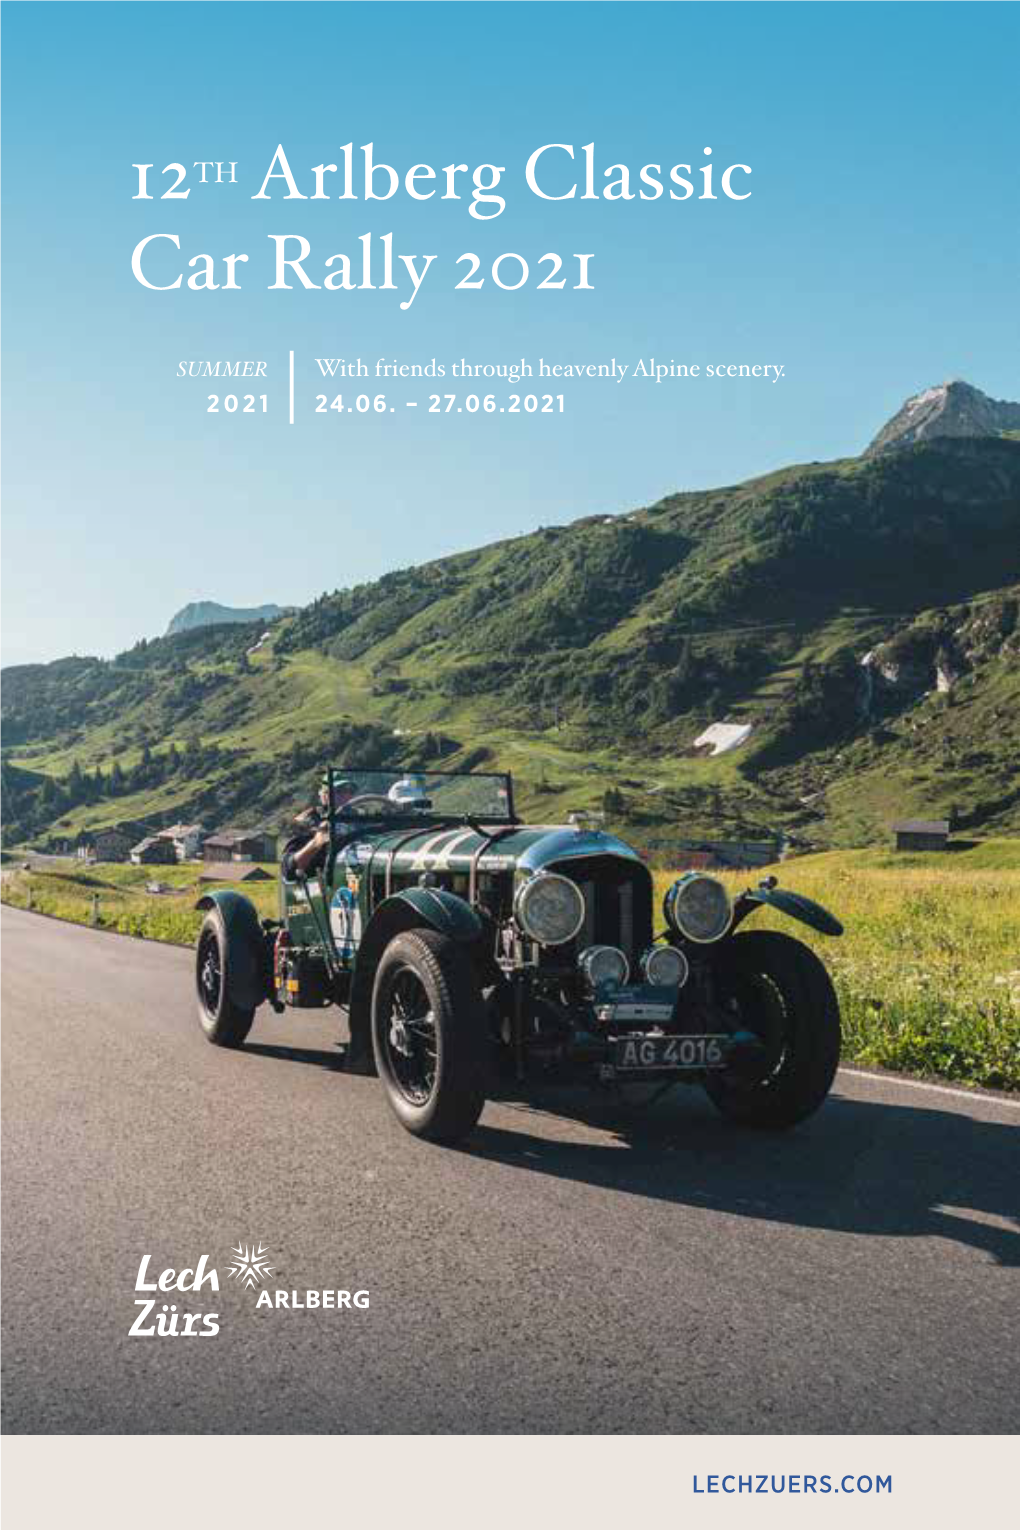 12TH Arlberg Classic Car Rally 2021